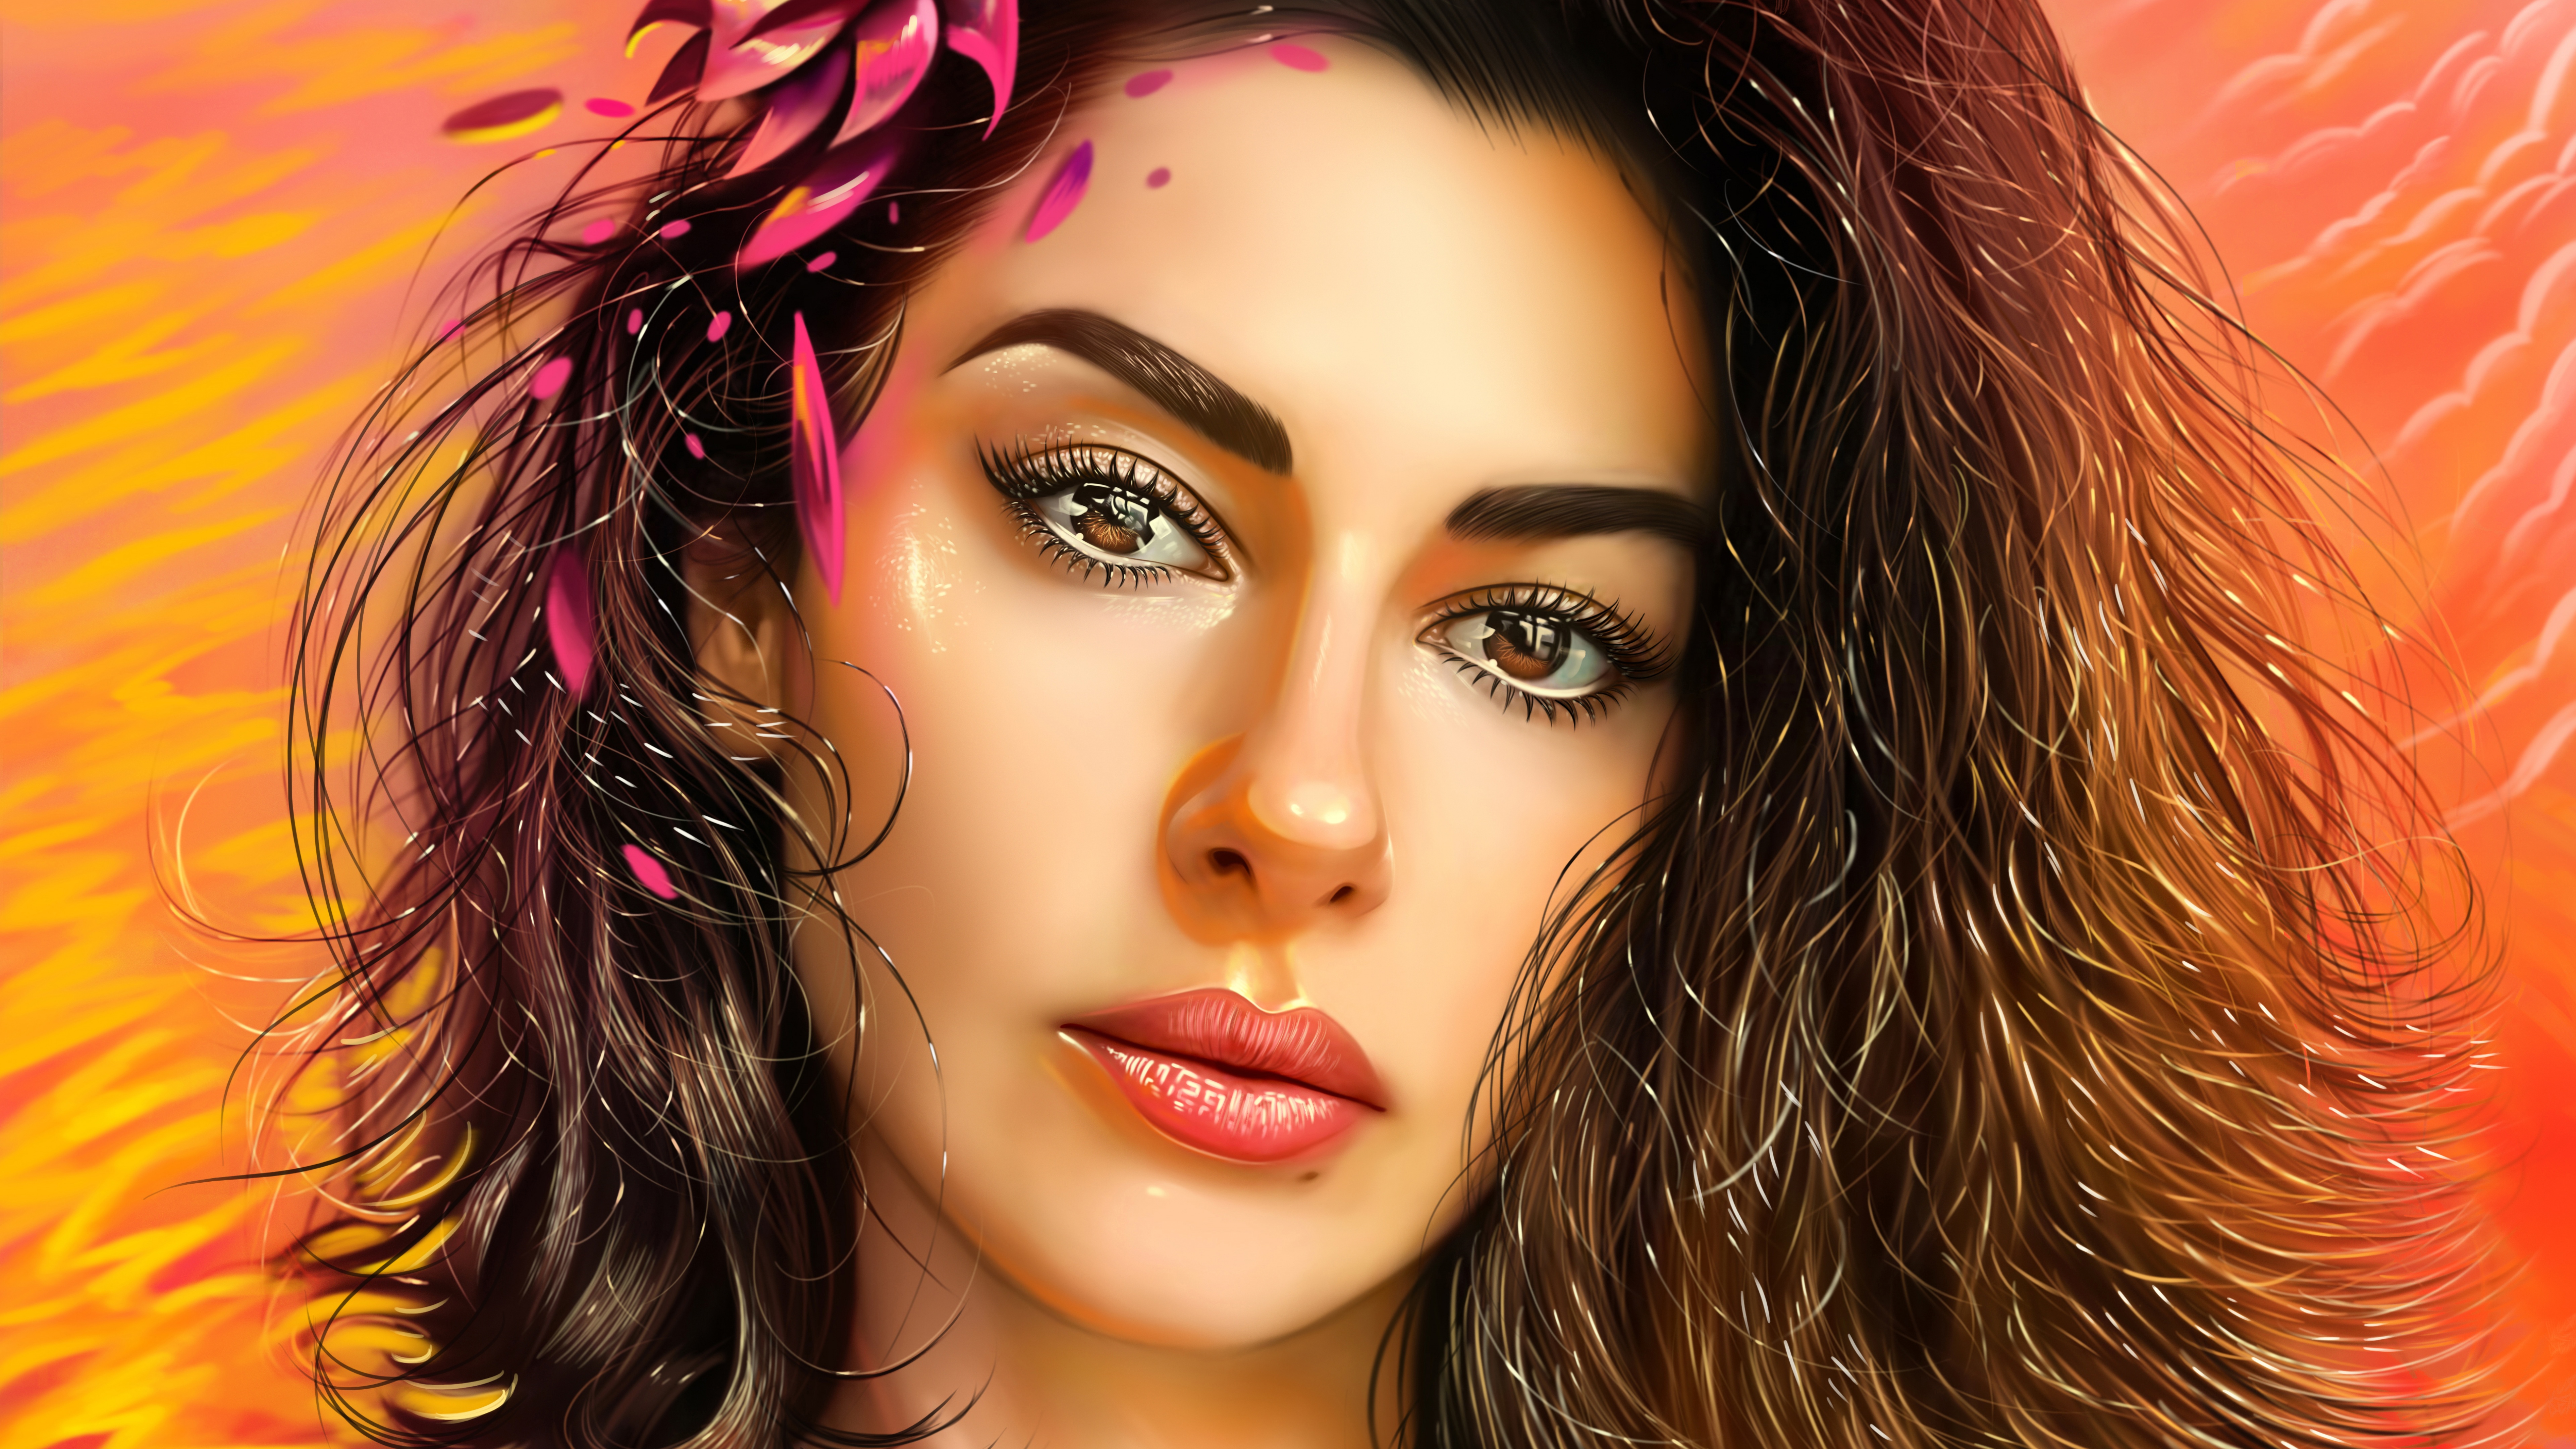 Most beautiful fantasy girl face expression digital art painting HD  wallpaper